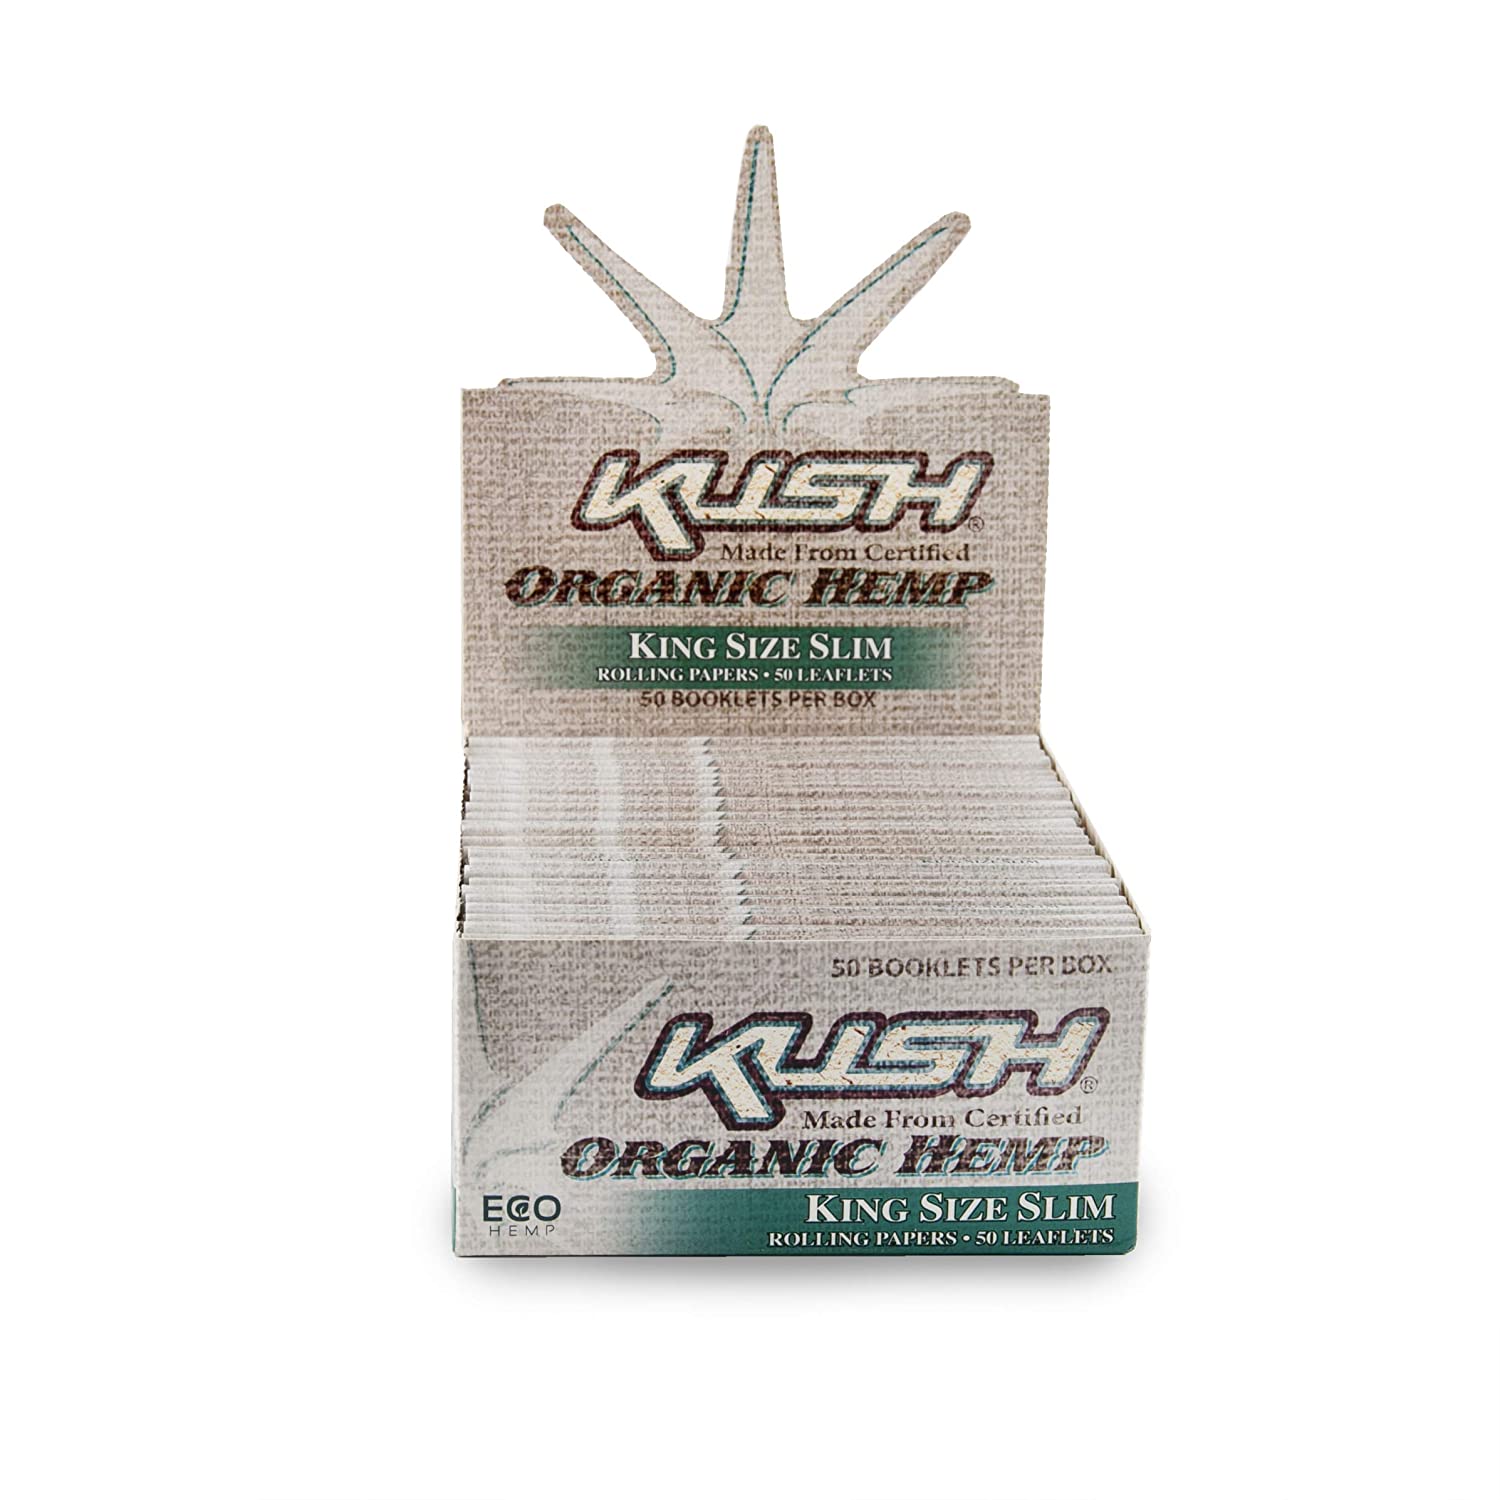 Kush Organic Hemp King Size Slim Rolling Papers 50 Leaflets 50 Booklets Per Box